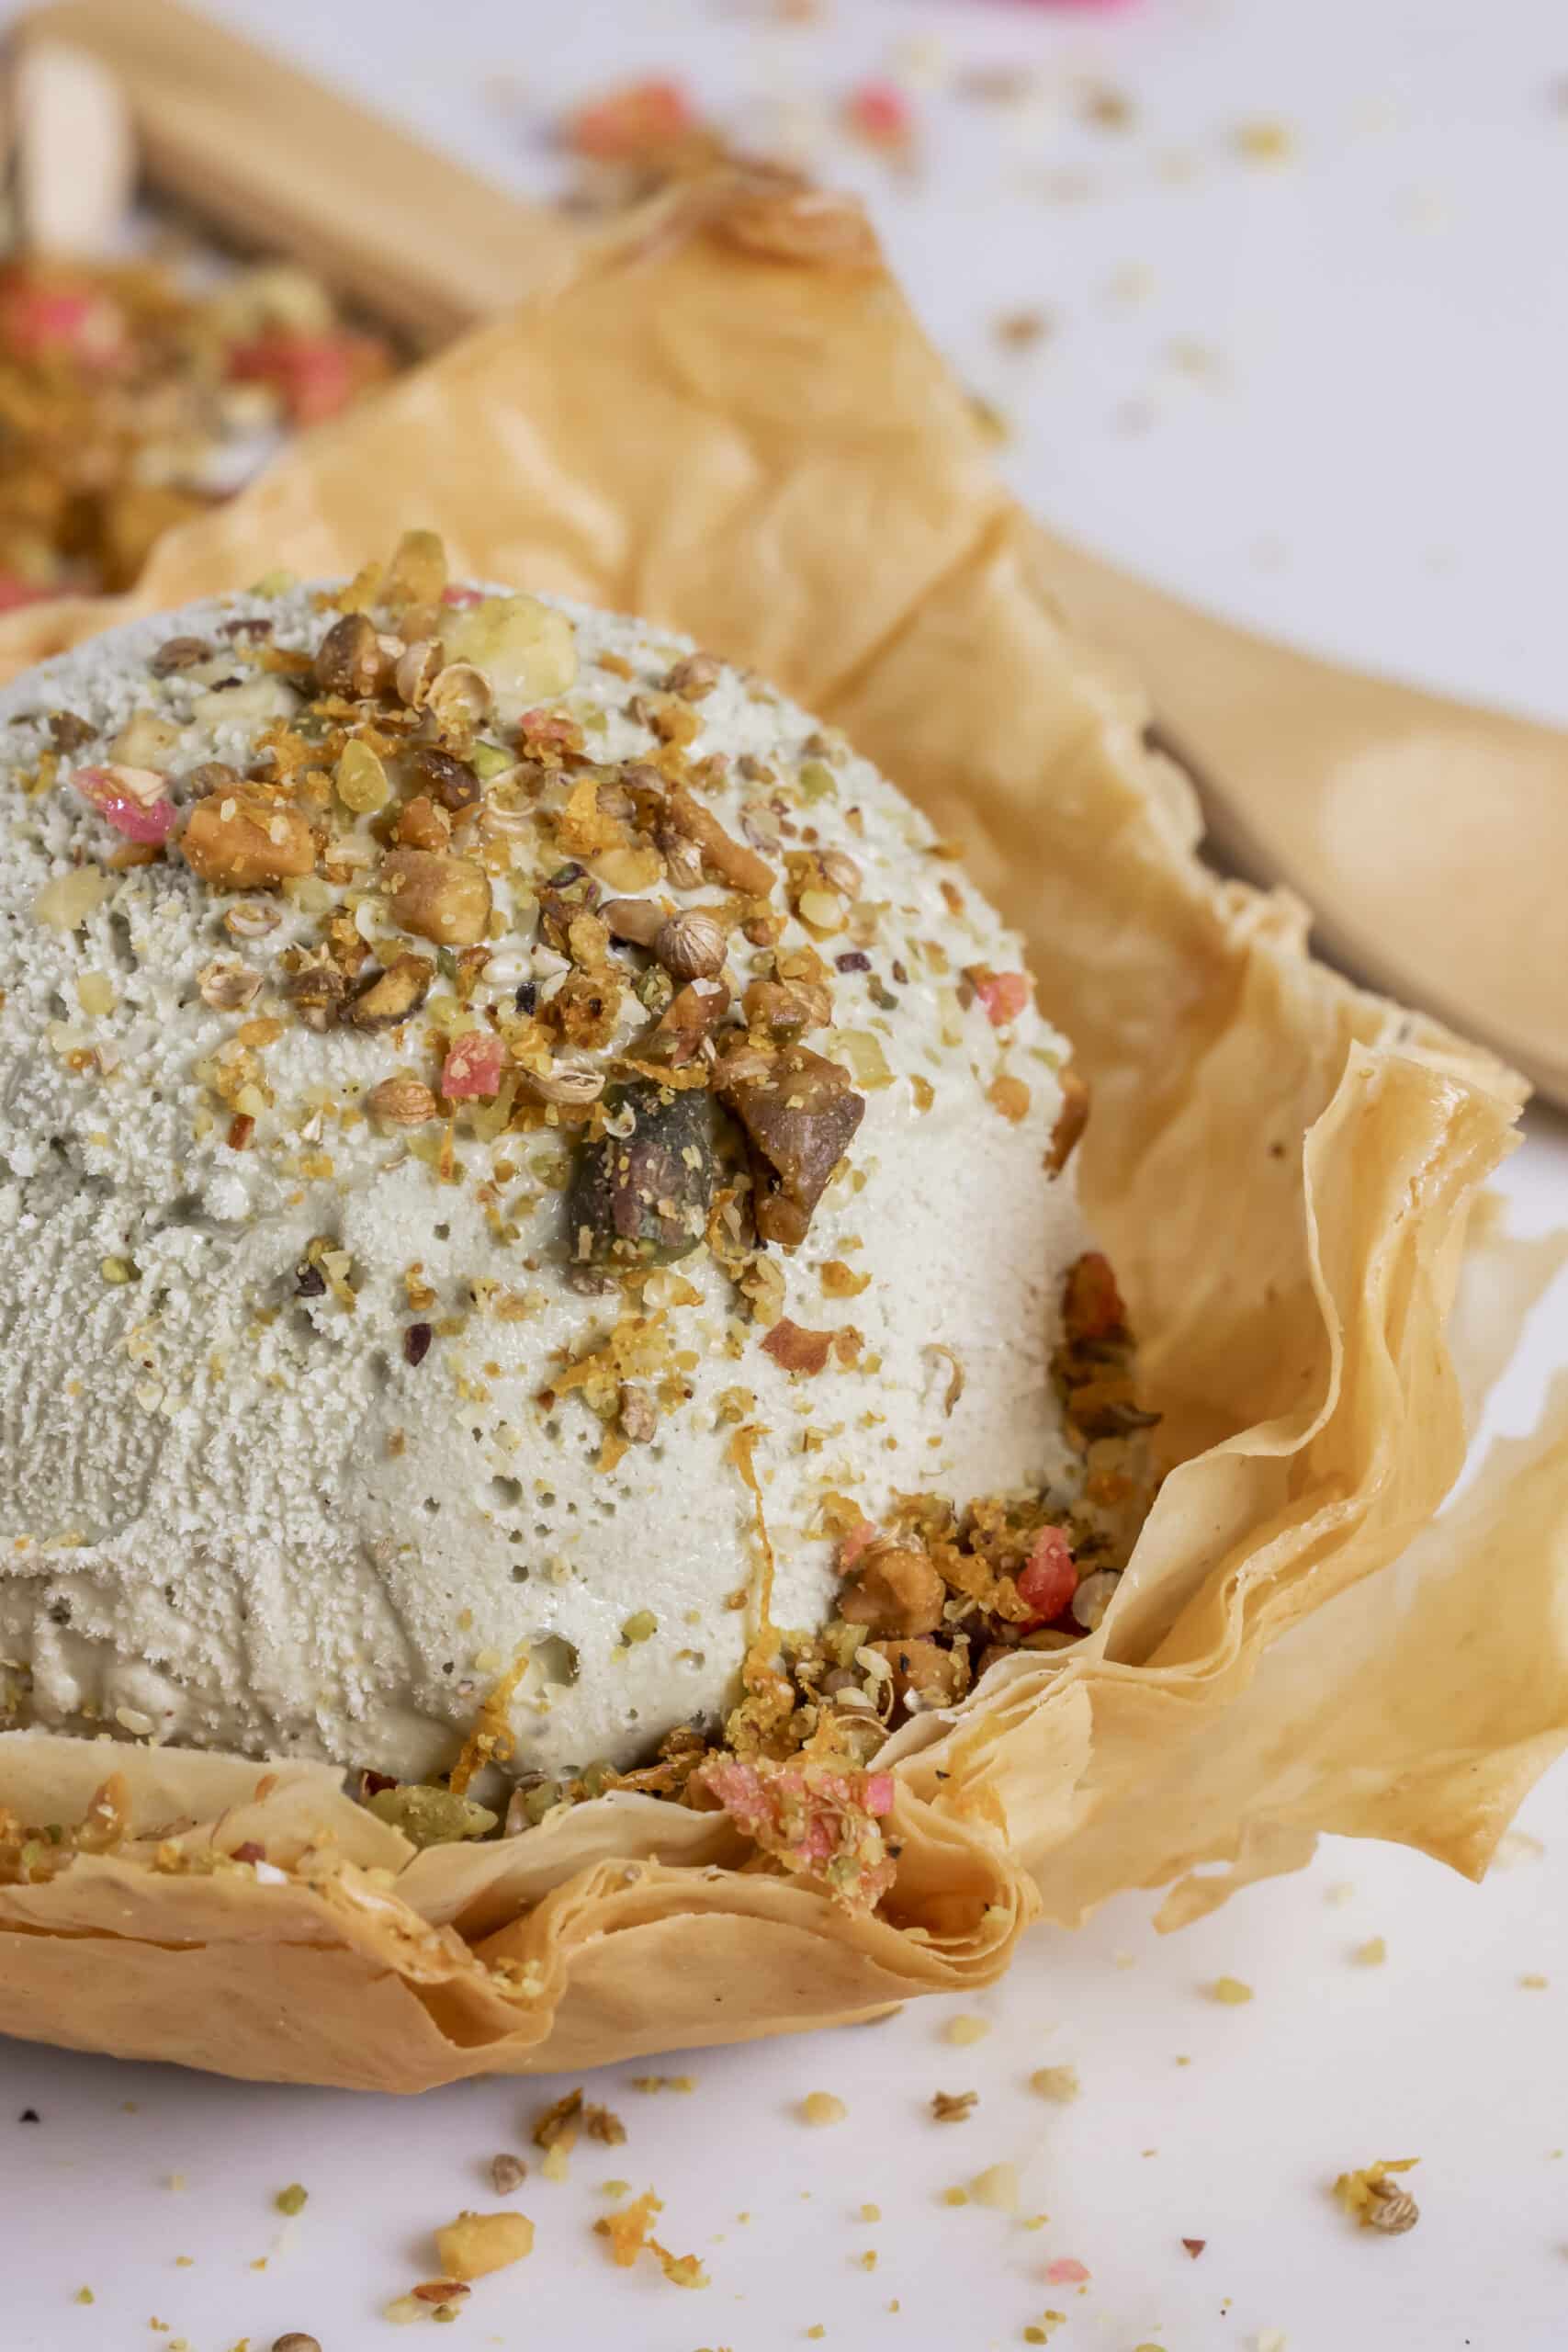 Pistachio gelato with dukkah and phyllo